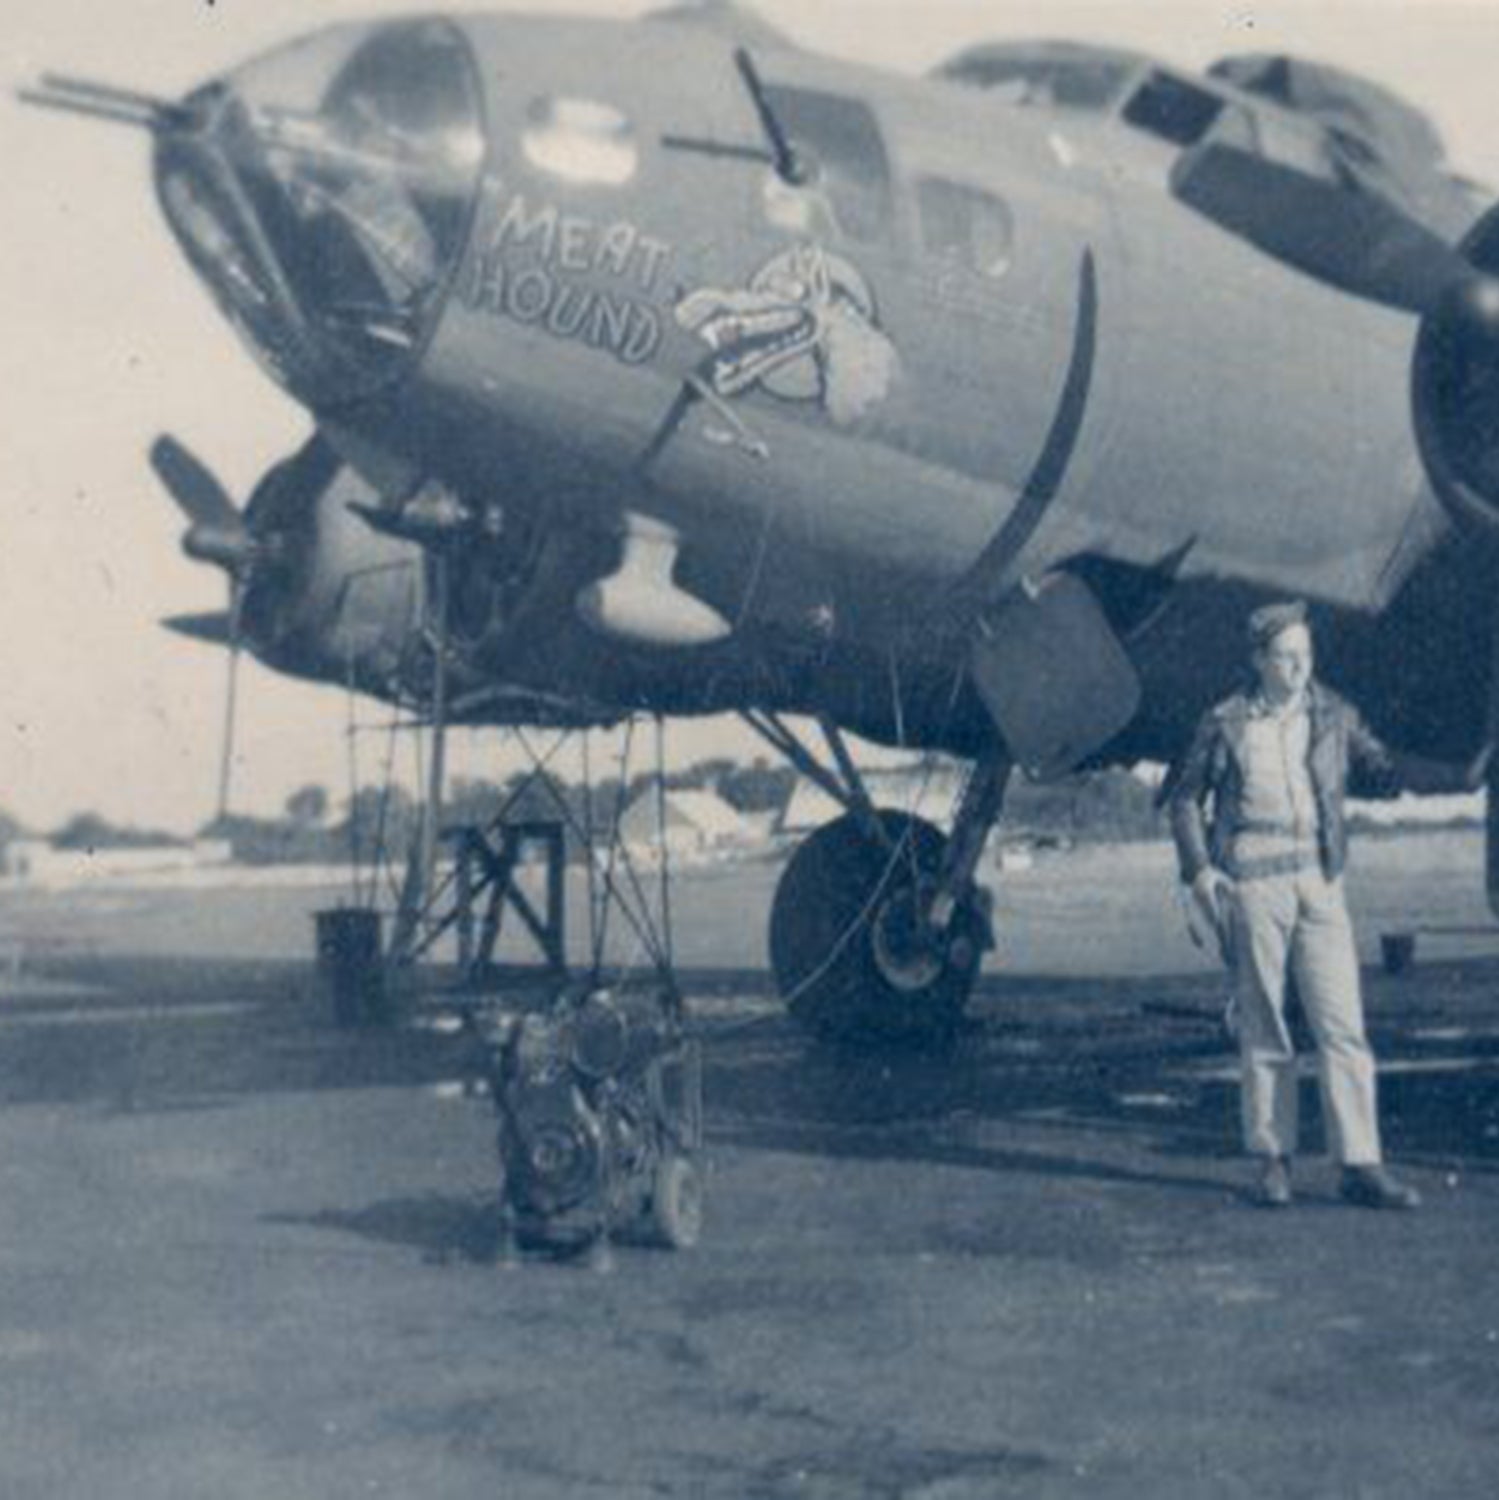 B-17 "Meat Hound" Inspired 20oz (590ml) Stainless Steel Tumbler - I Love a Hangar